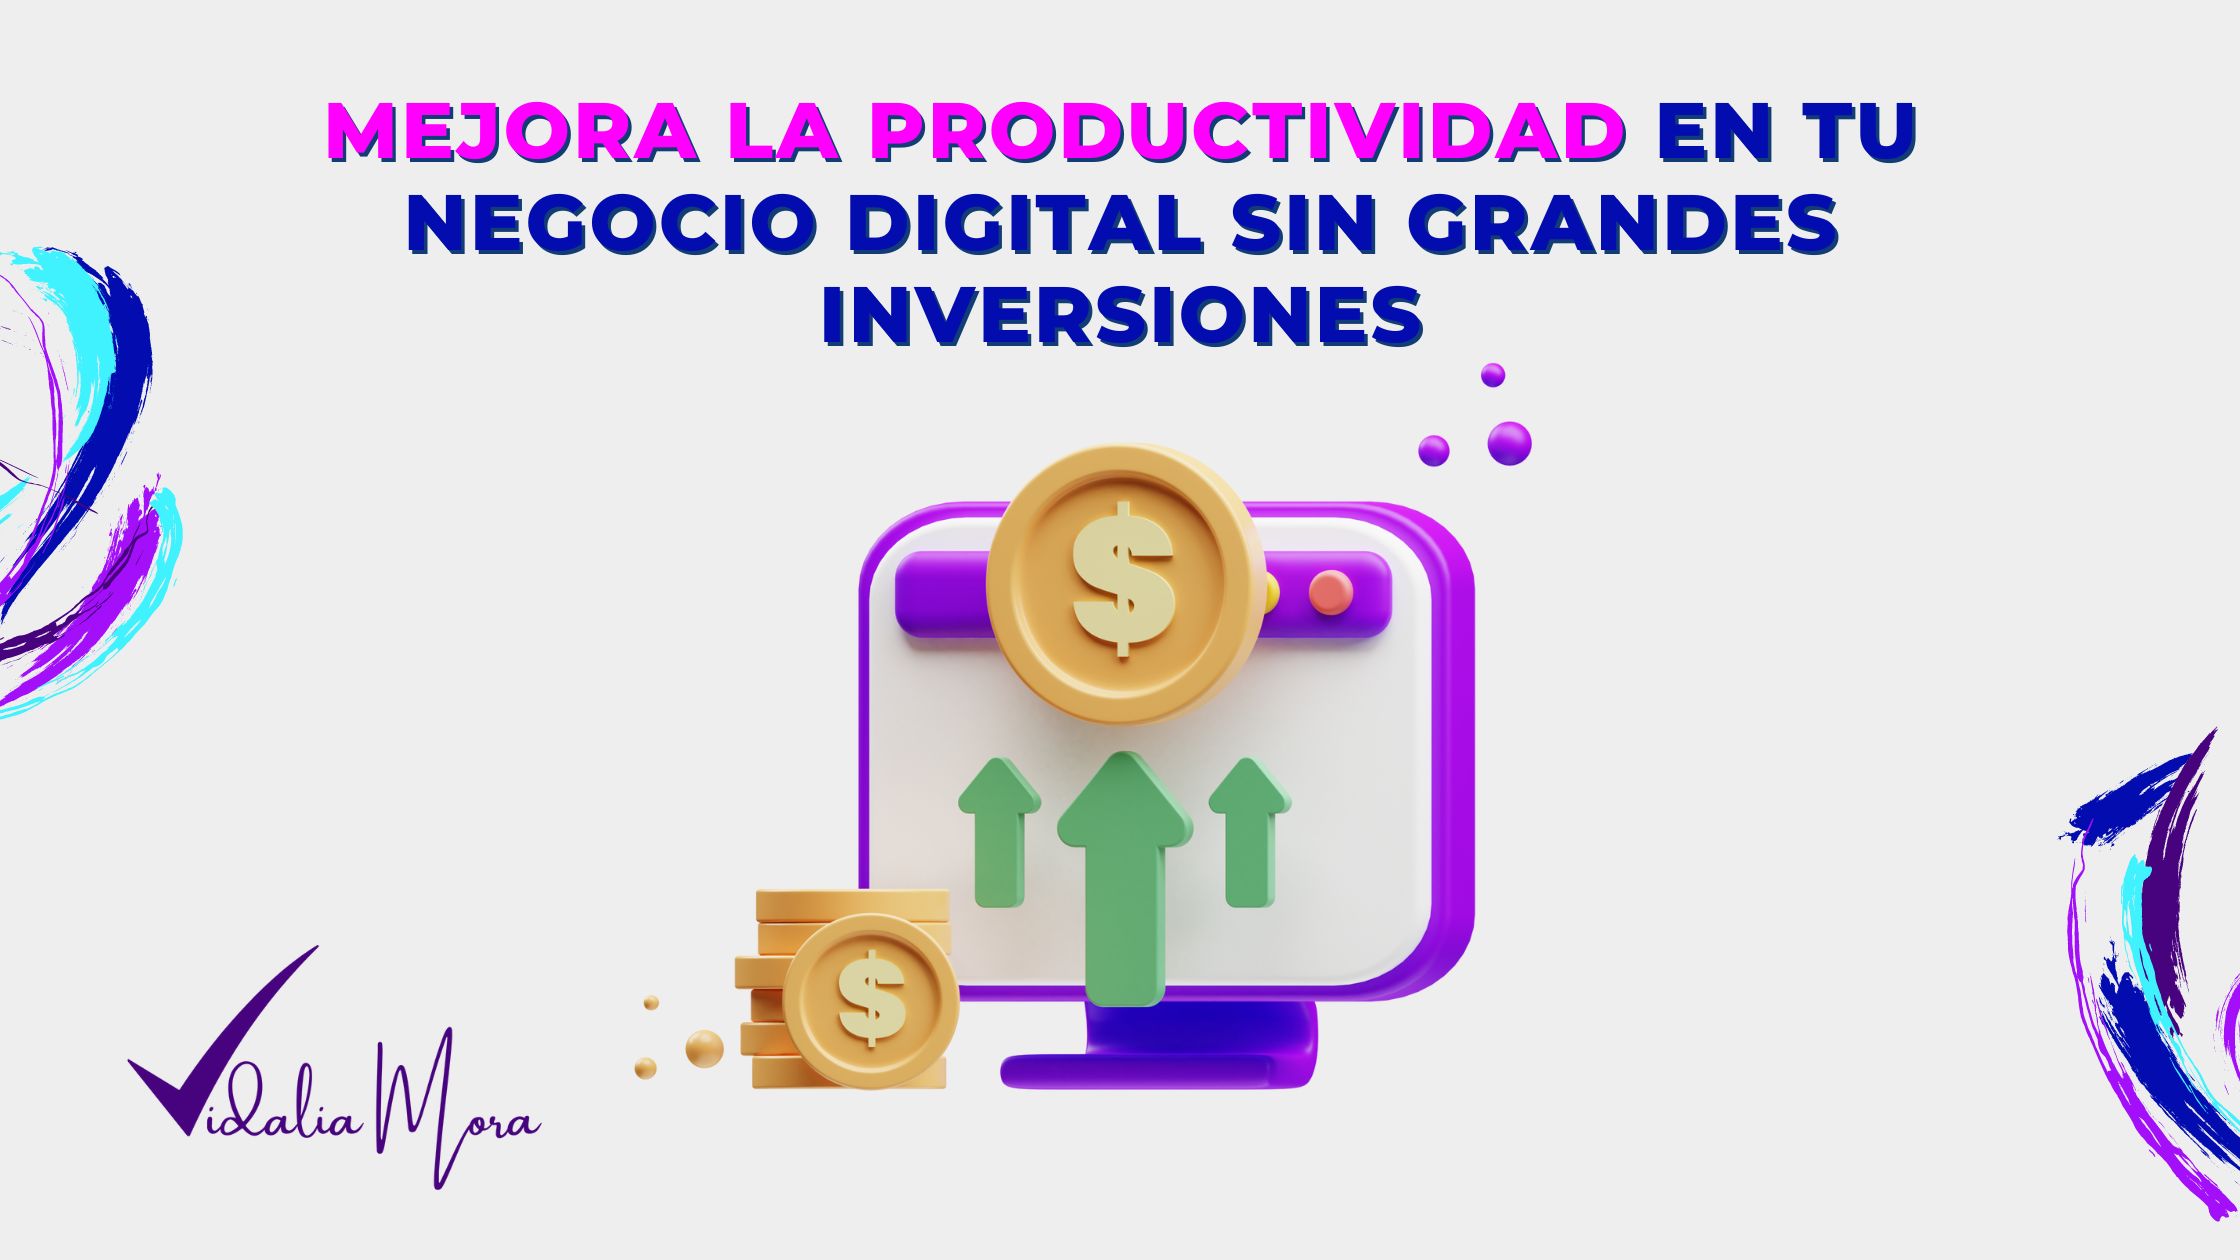 Mejorar Productividad Vidalia Mora Project Manager Digital